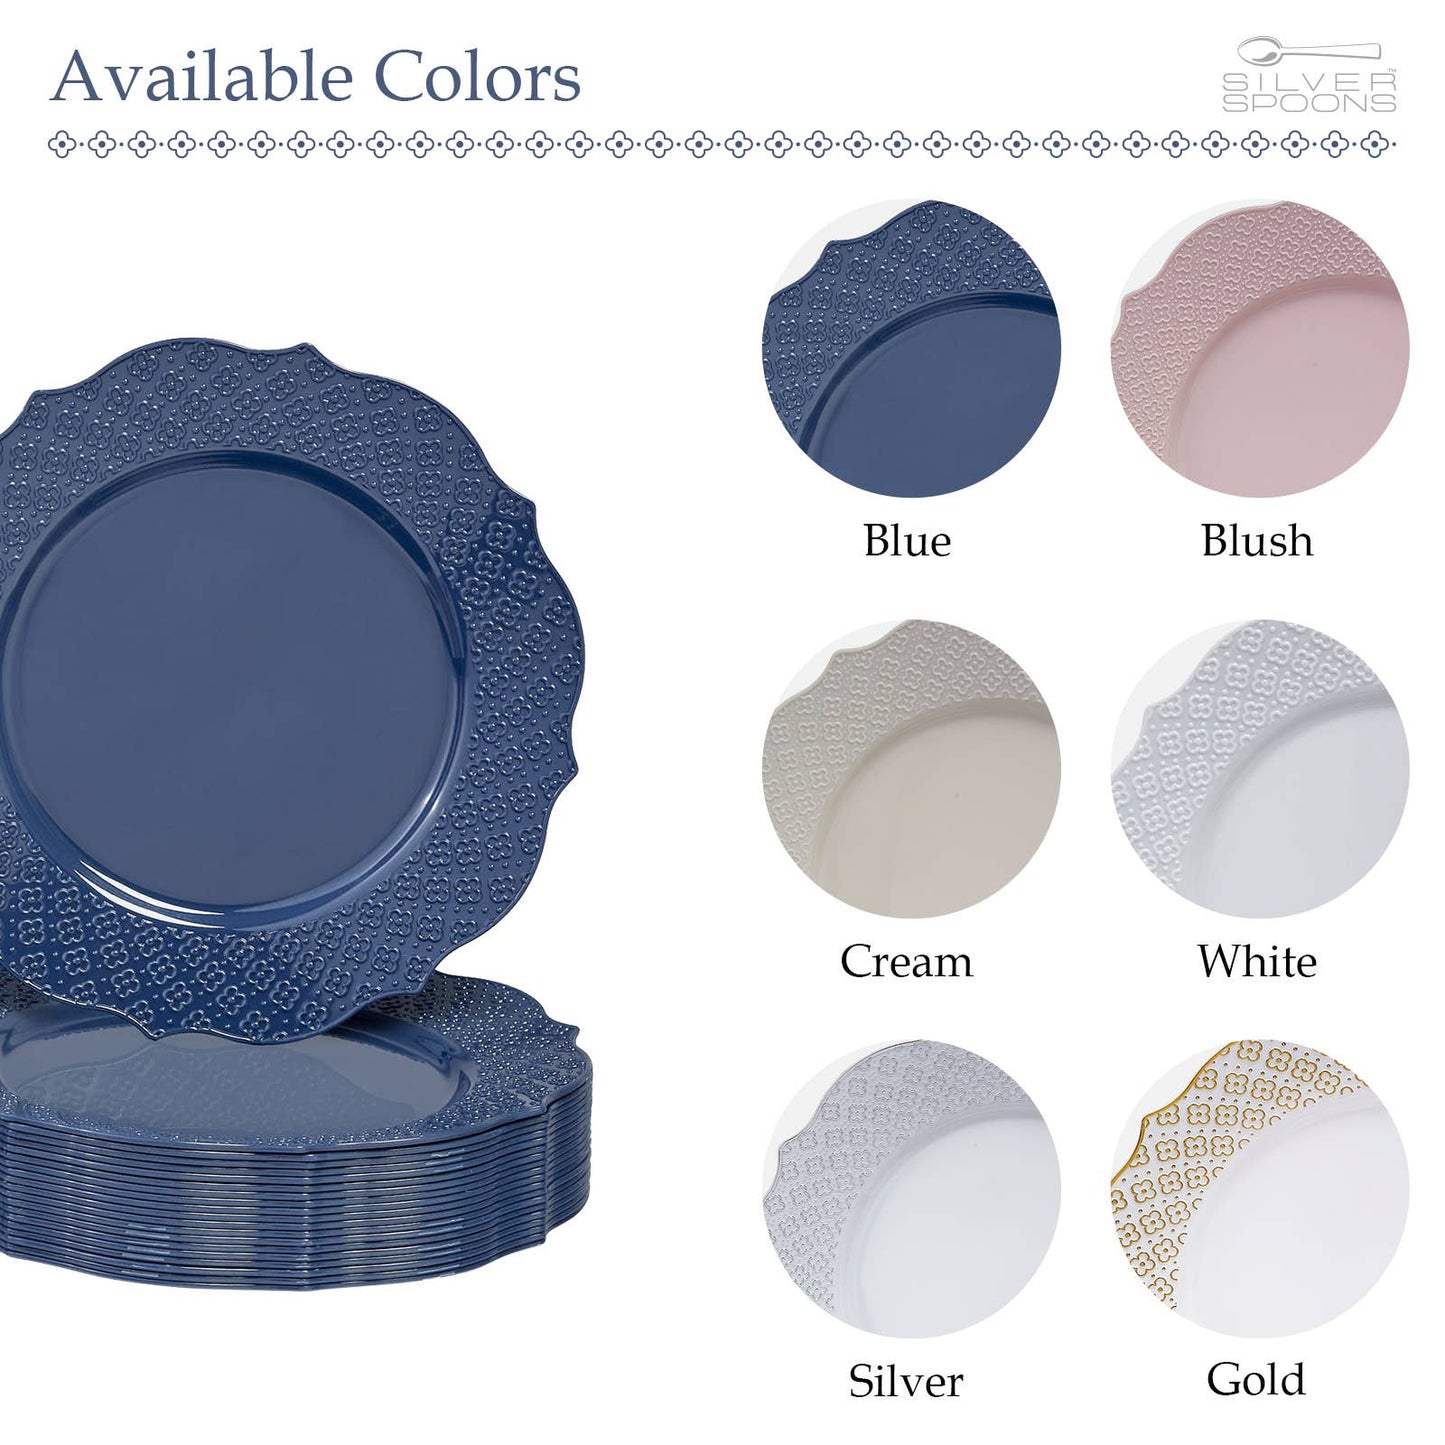 Blue Plates: Salad Plates